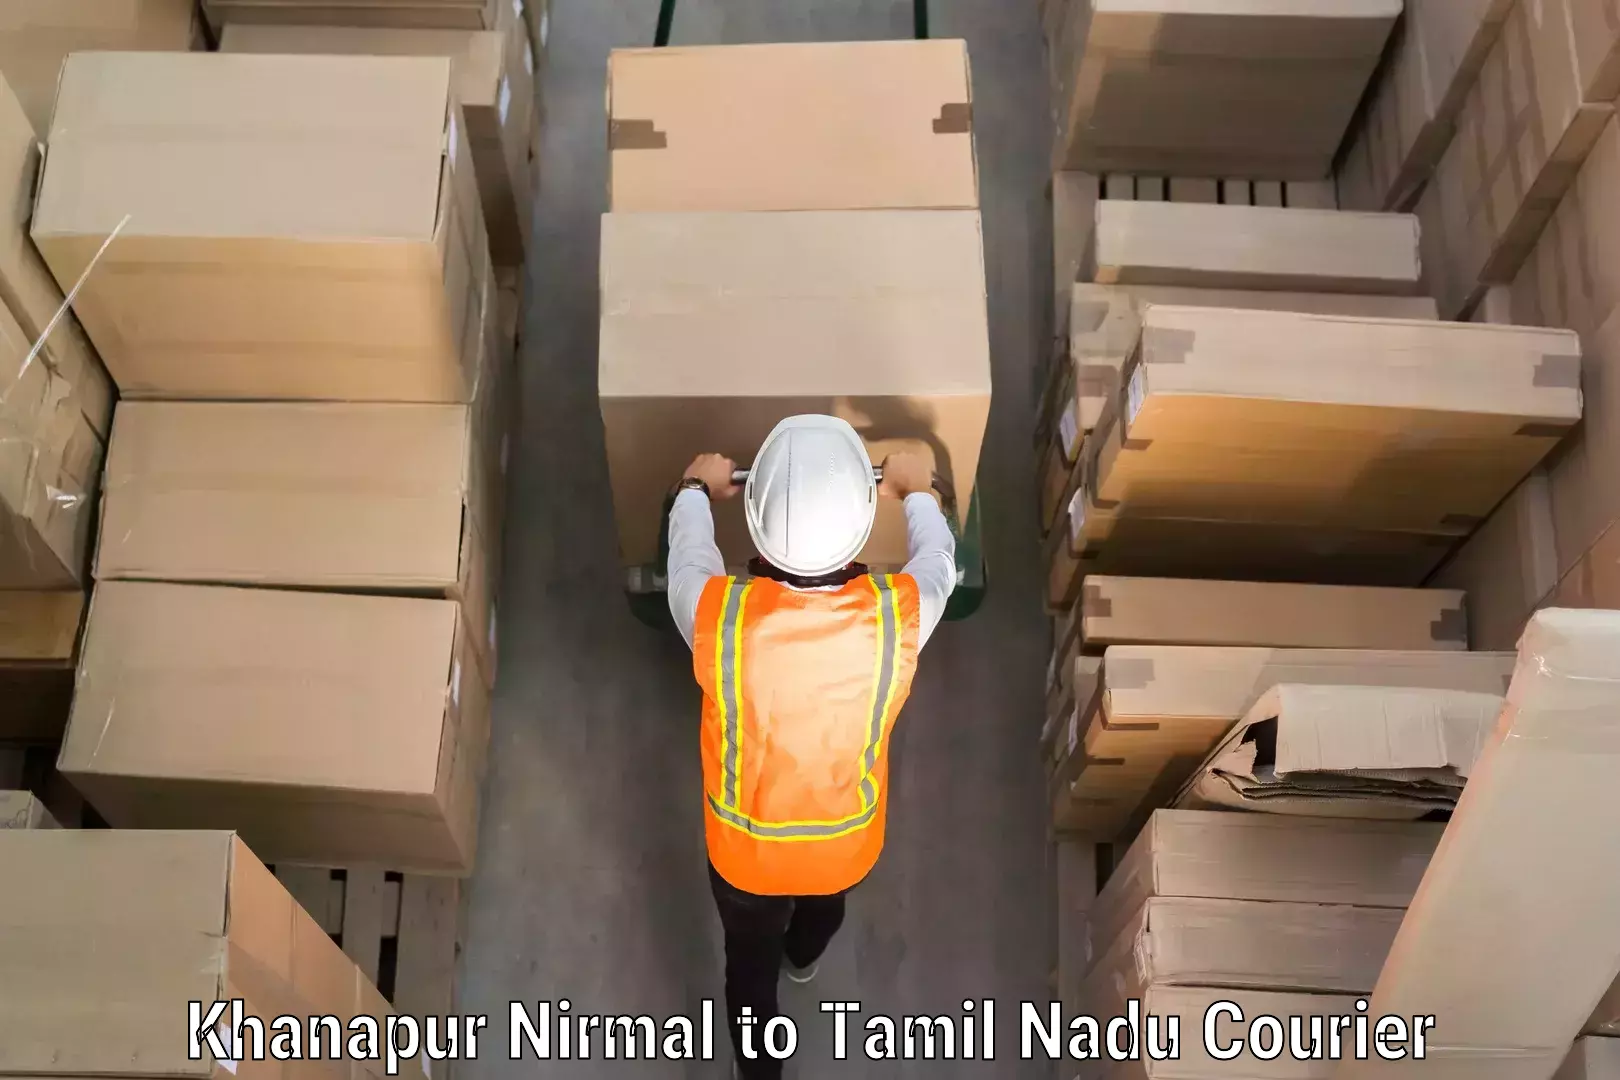 Baggage shipping experience Khanapur Nirmal to Eral